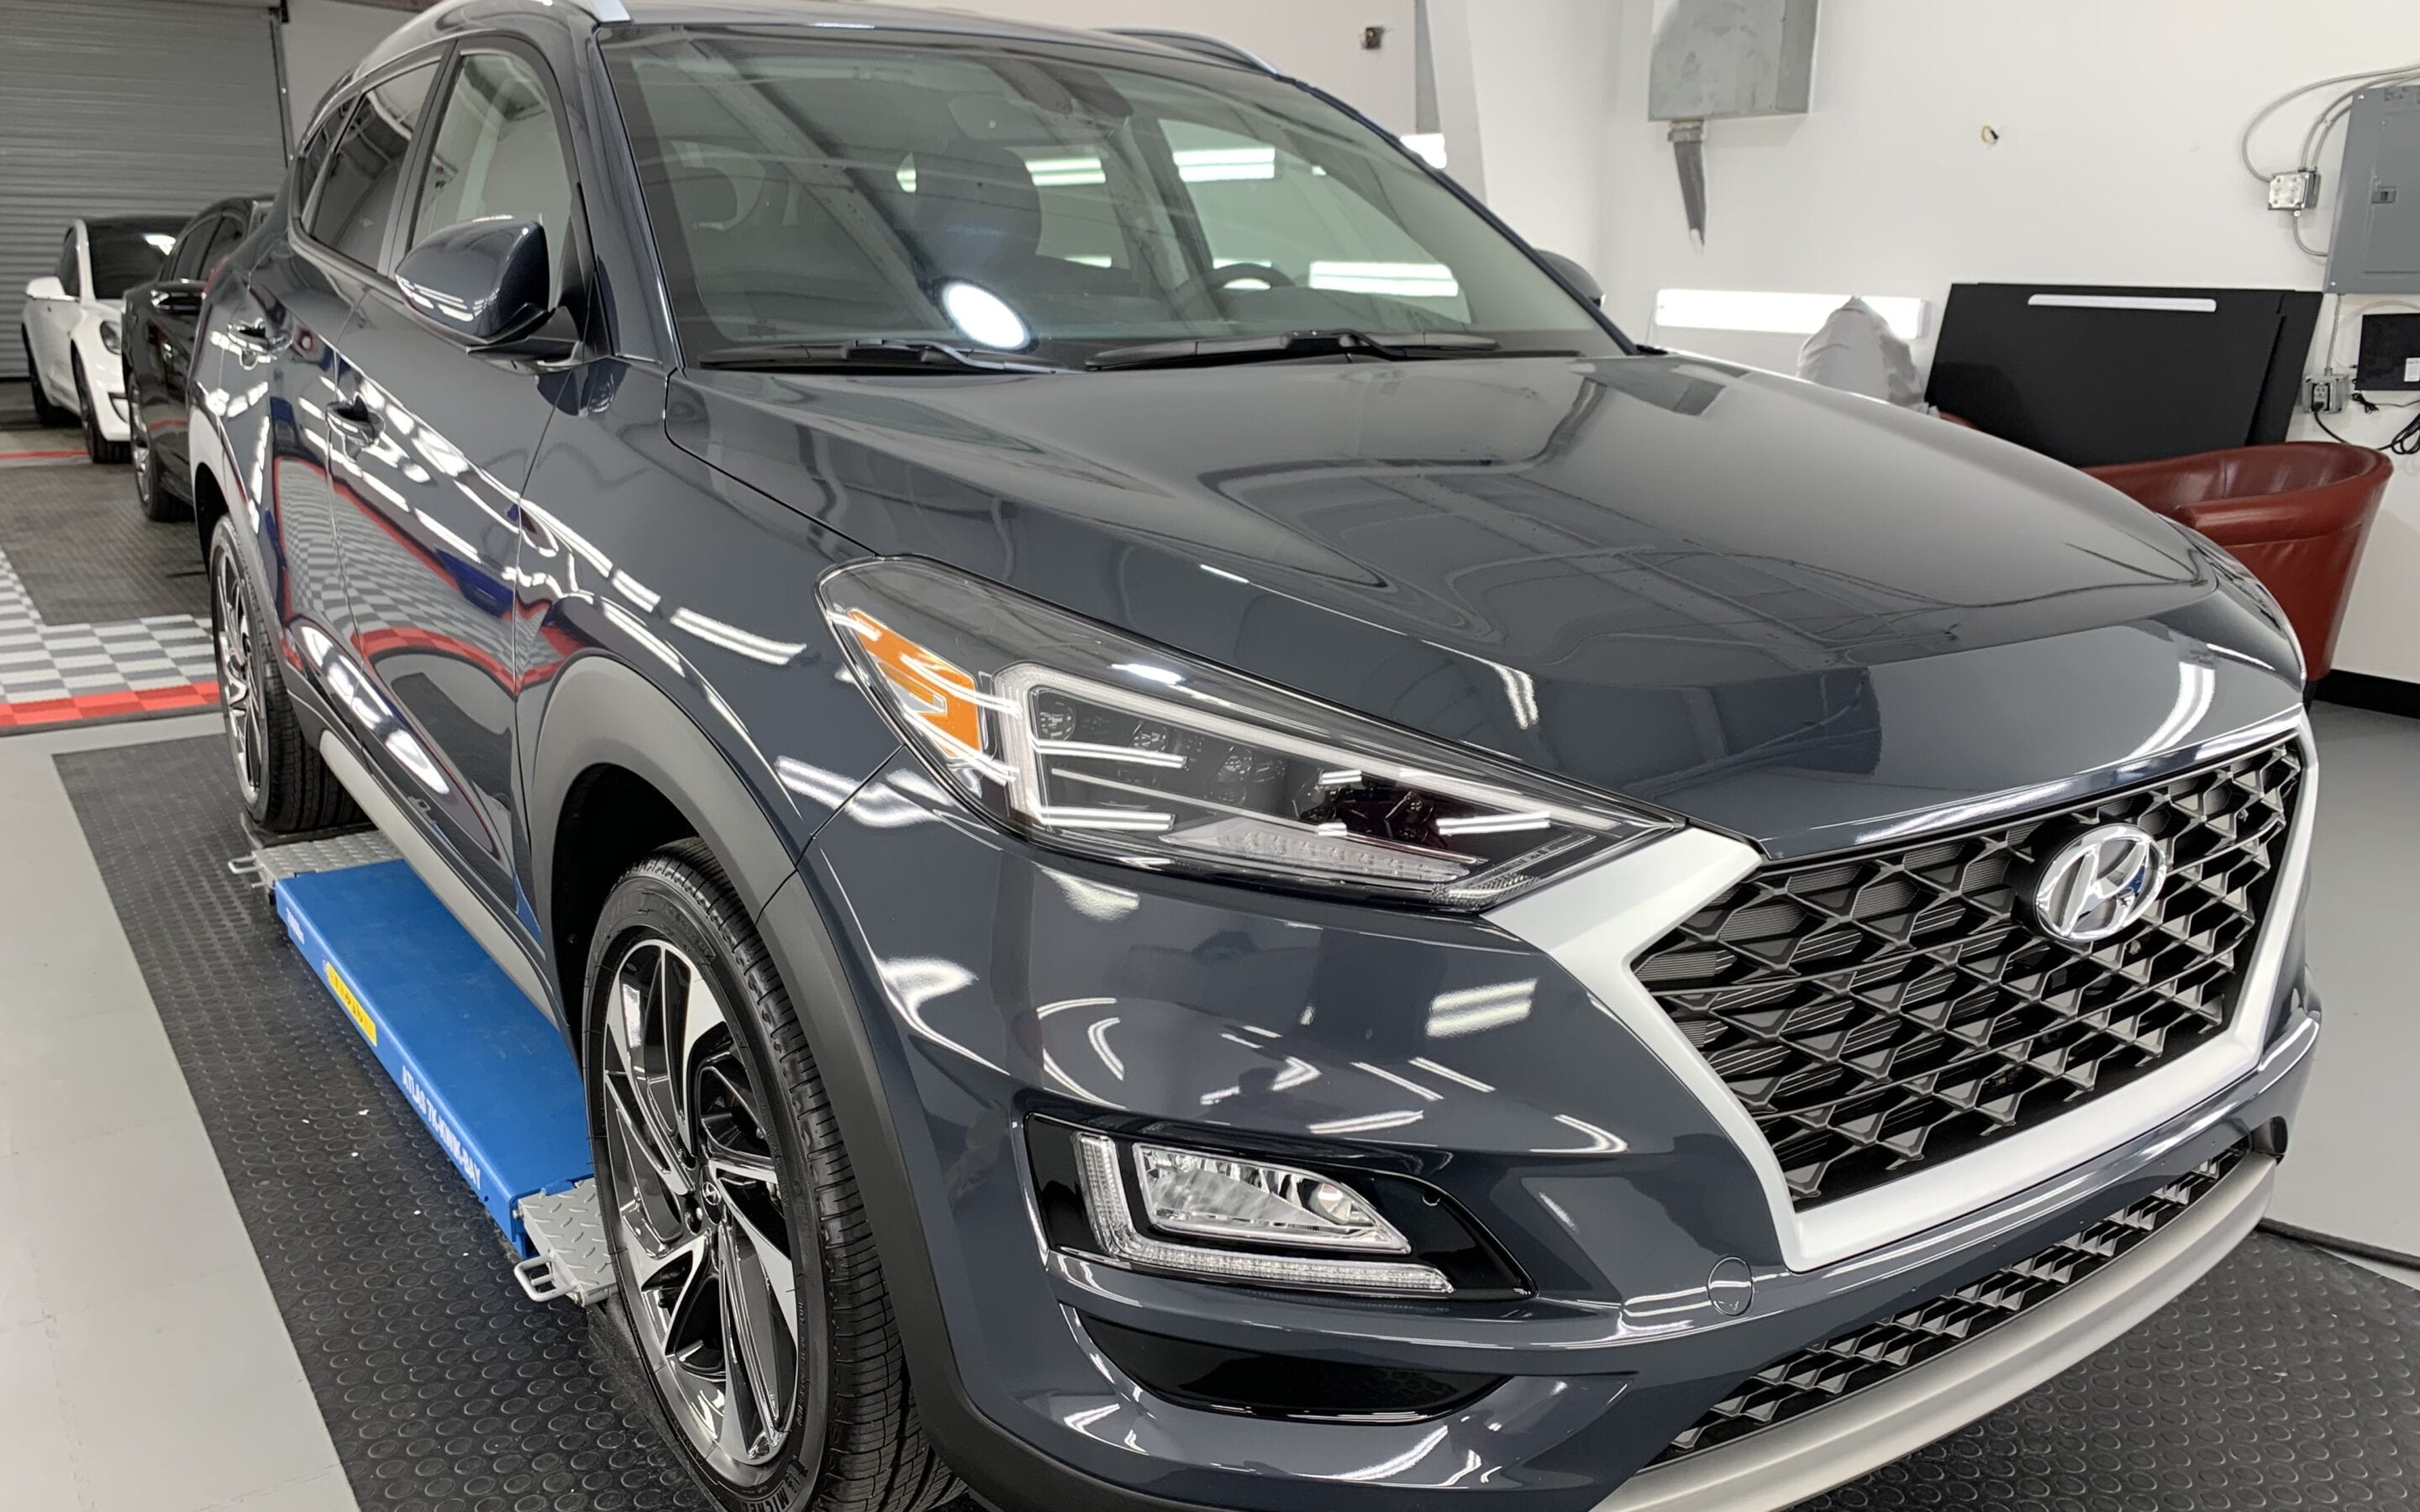 Photo of a New Car Preparation of a 2021 Hyundai Tucson